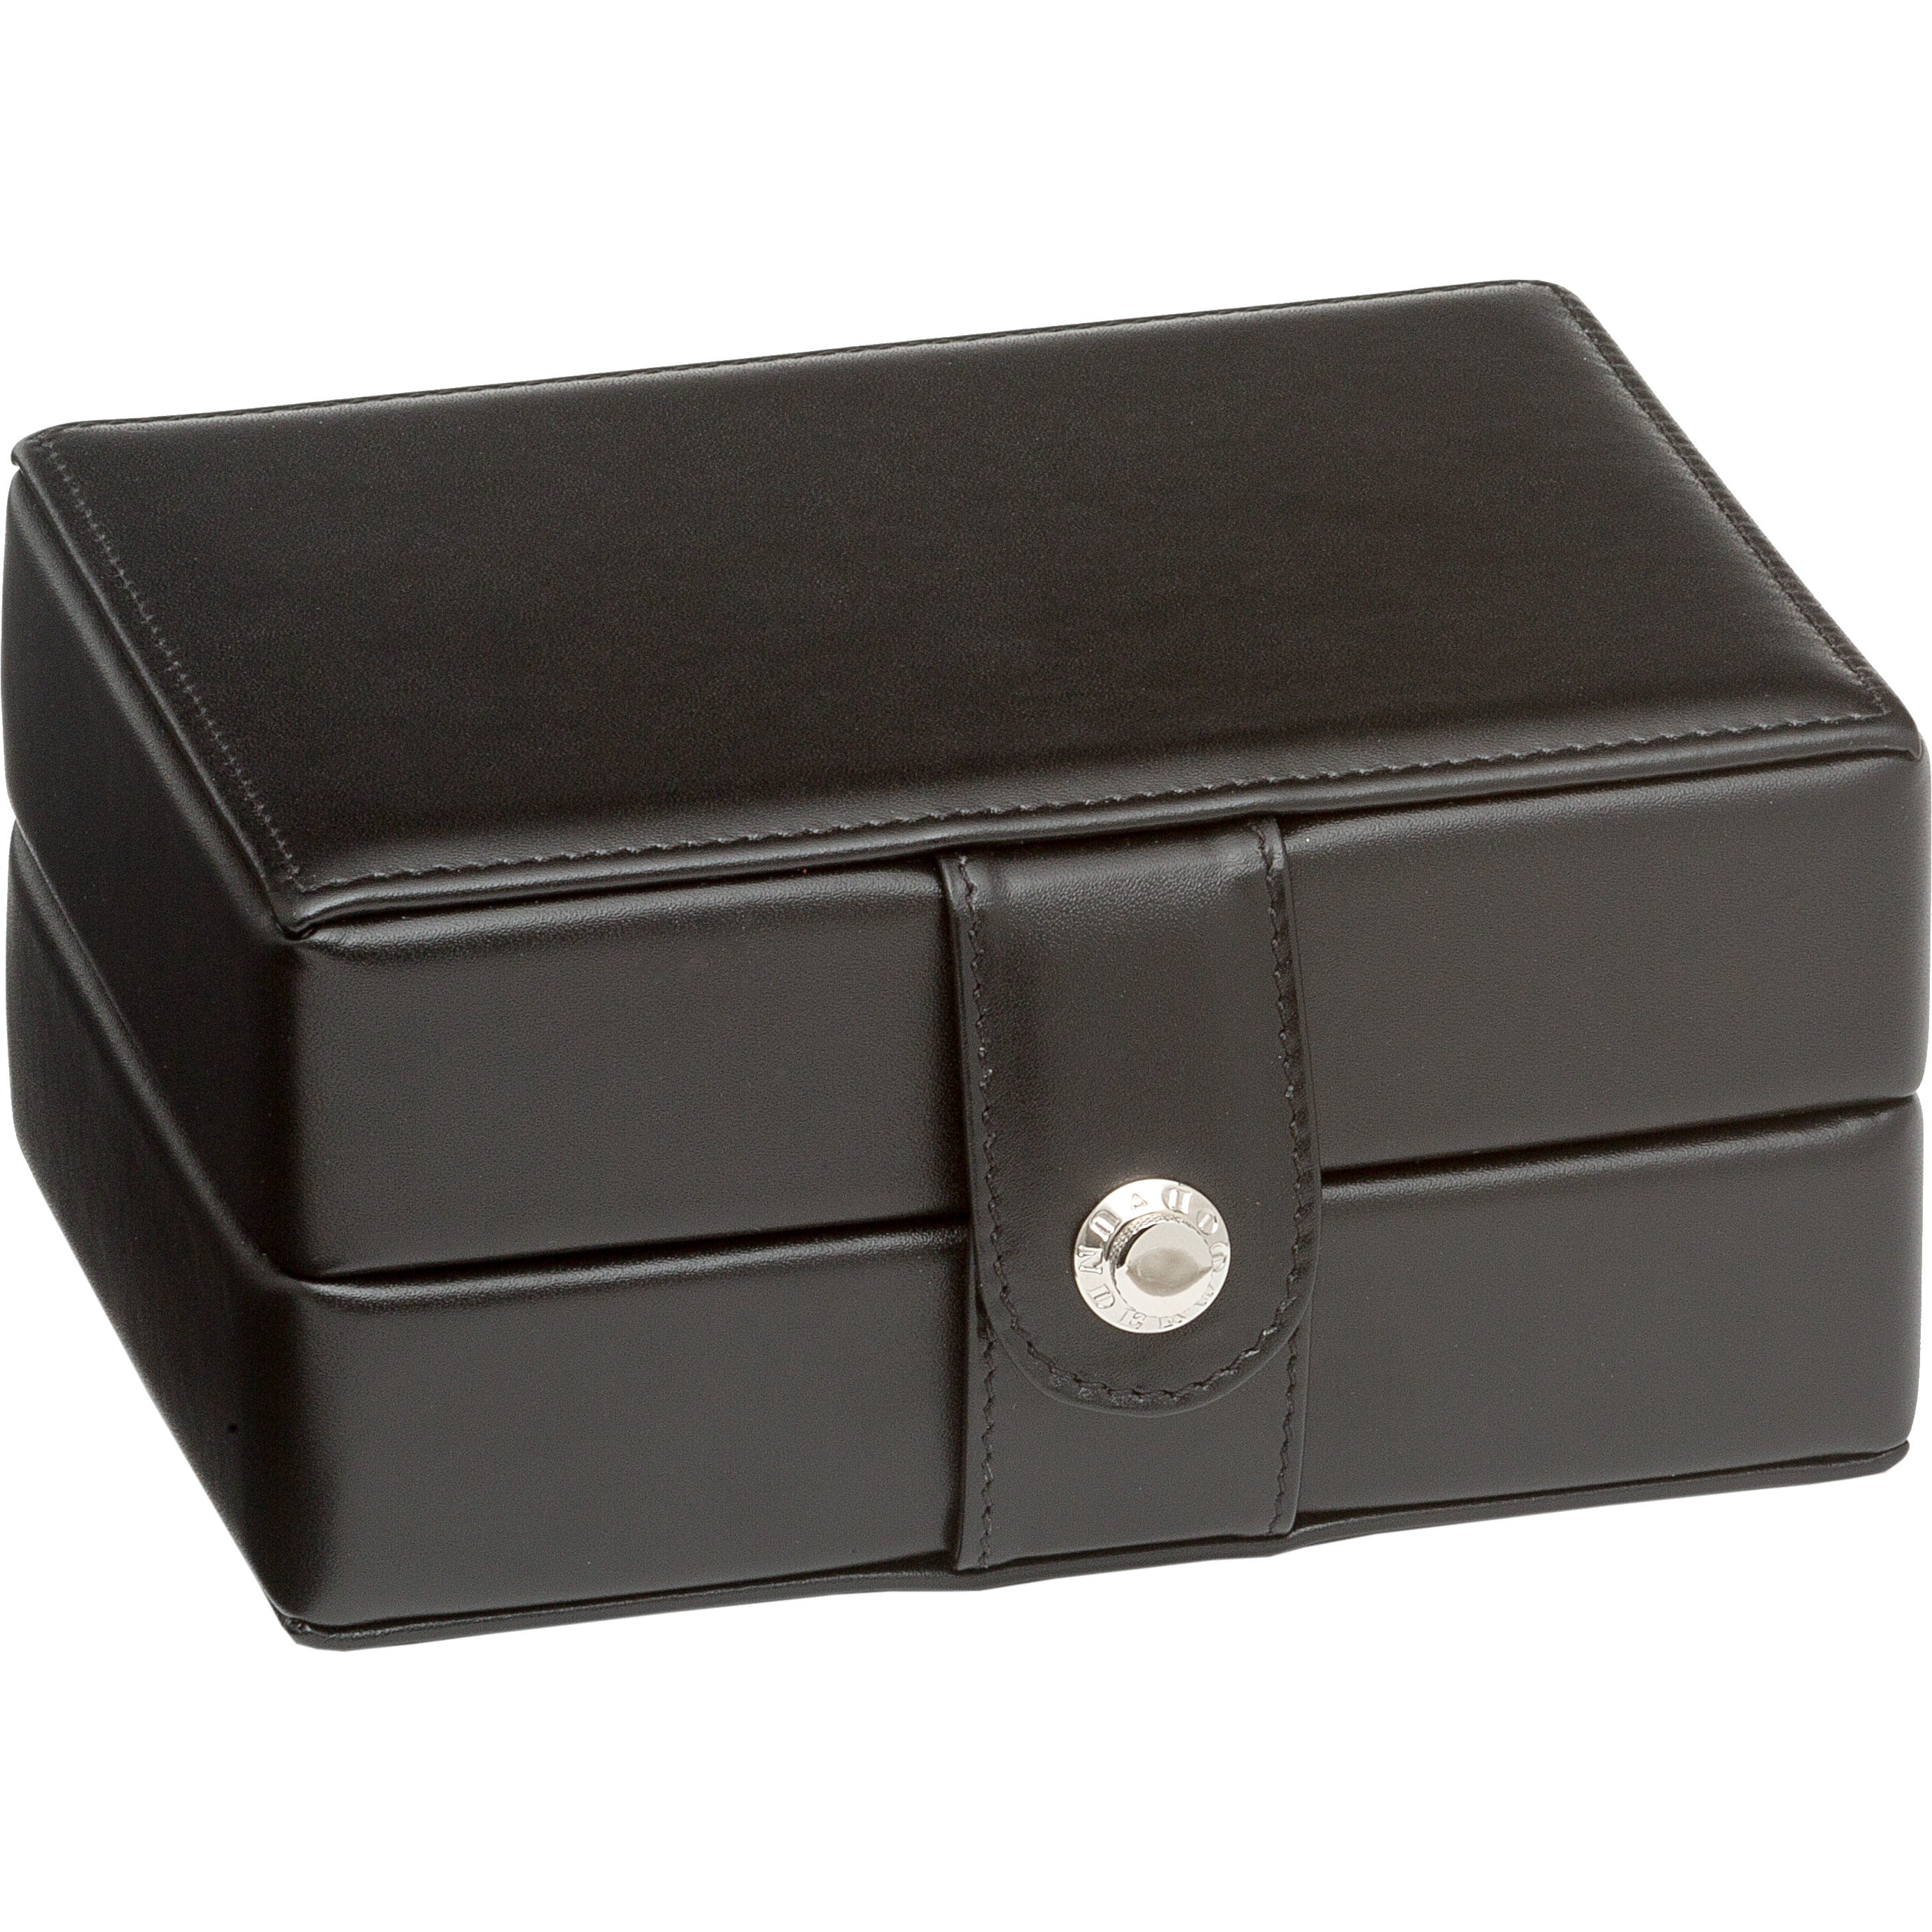 Underwood (London) - 2-Unit Watch Storage Case in Black Leather - Watchwindersplus